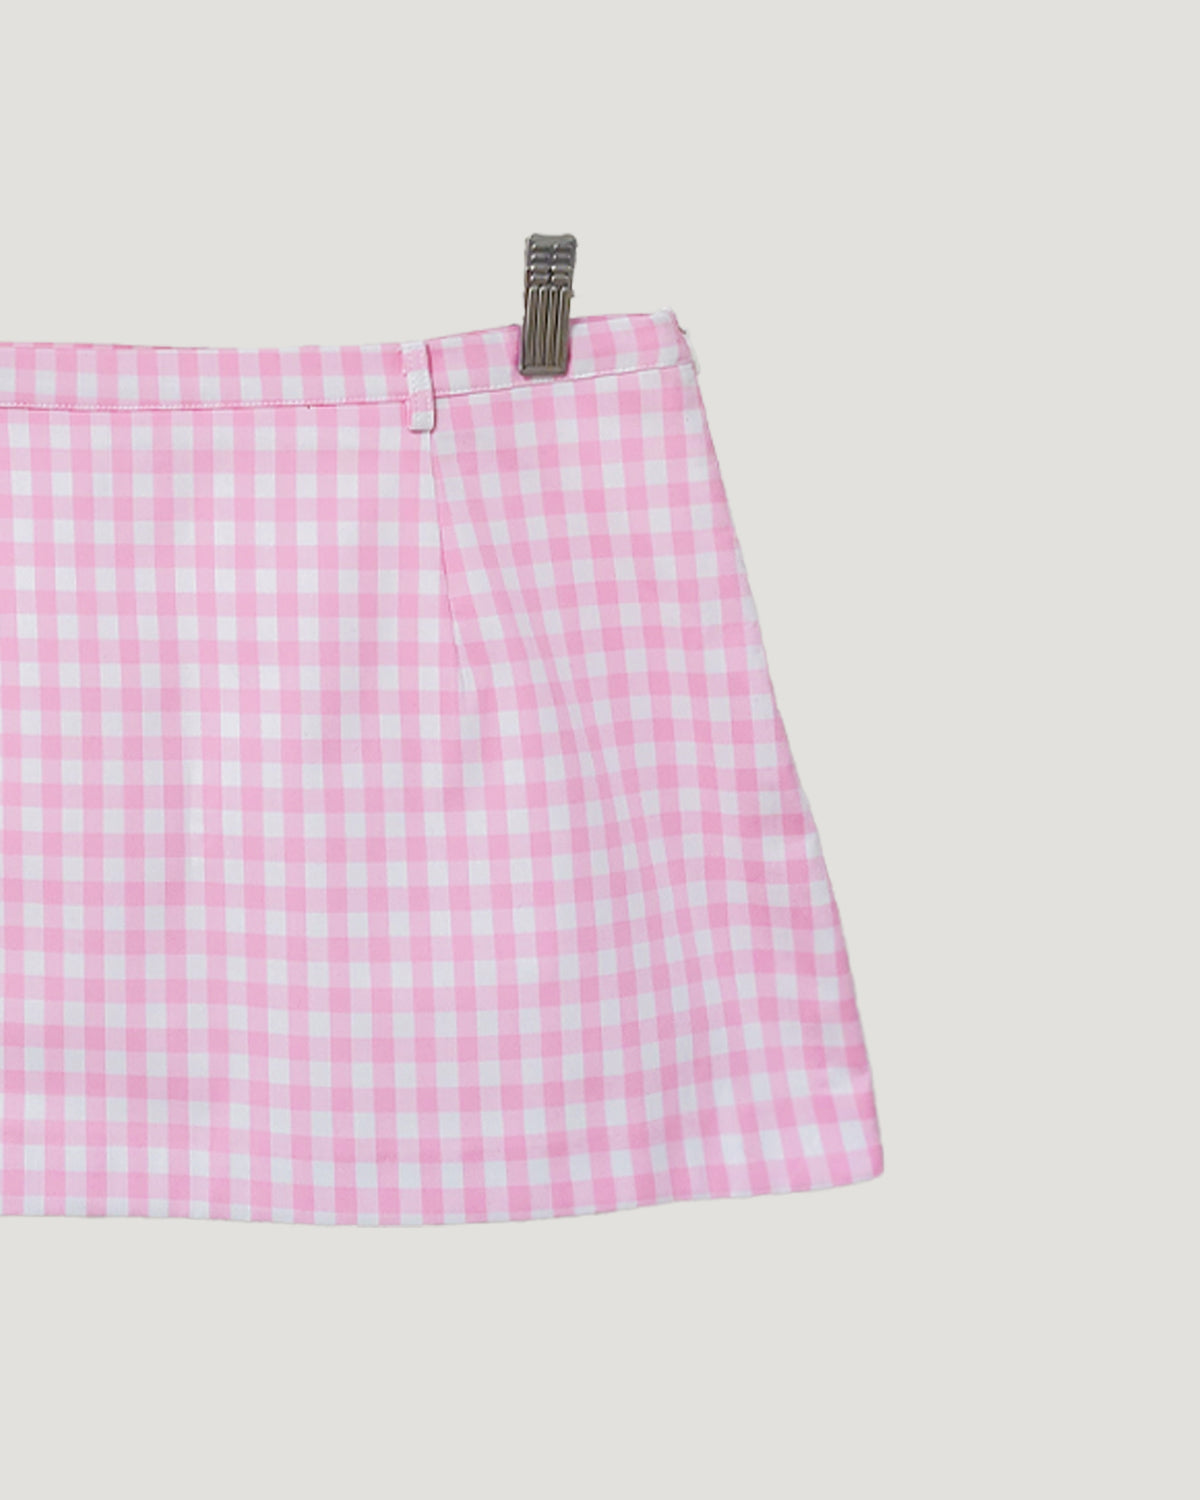 gingham check low waist micro mini skirt